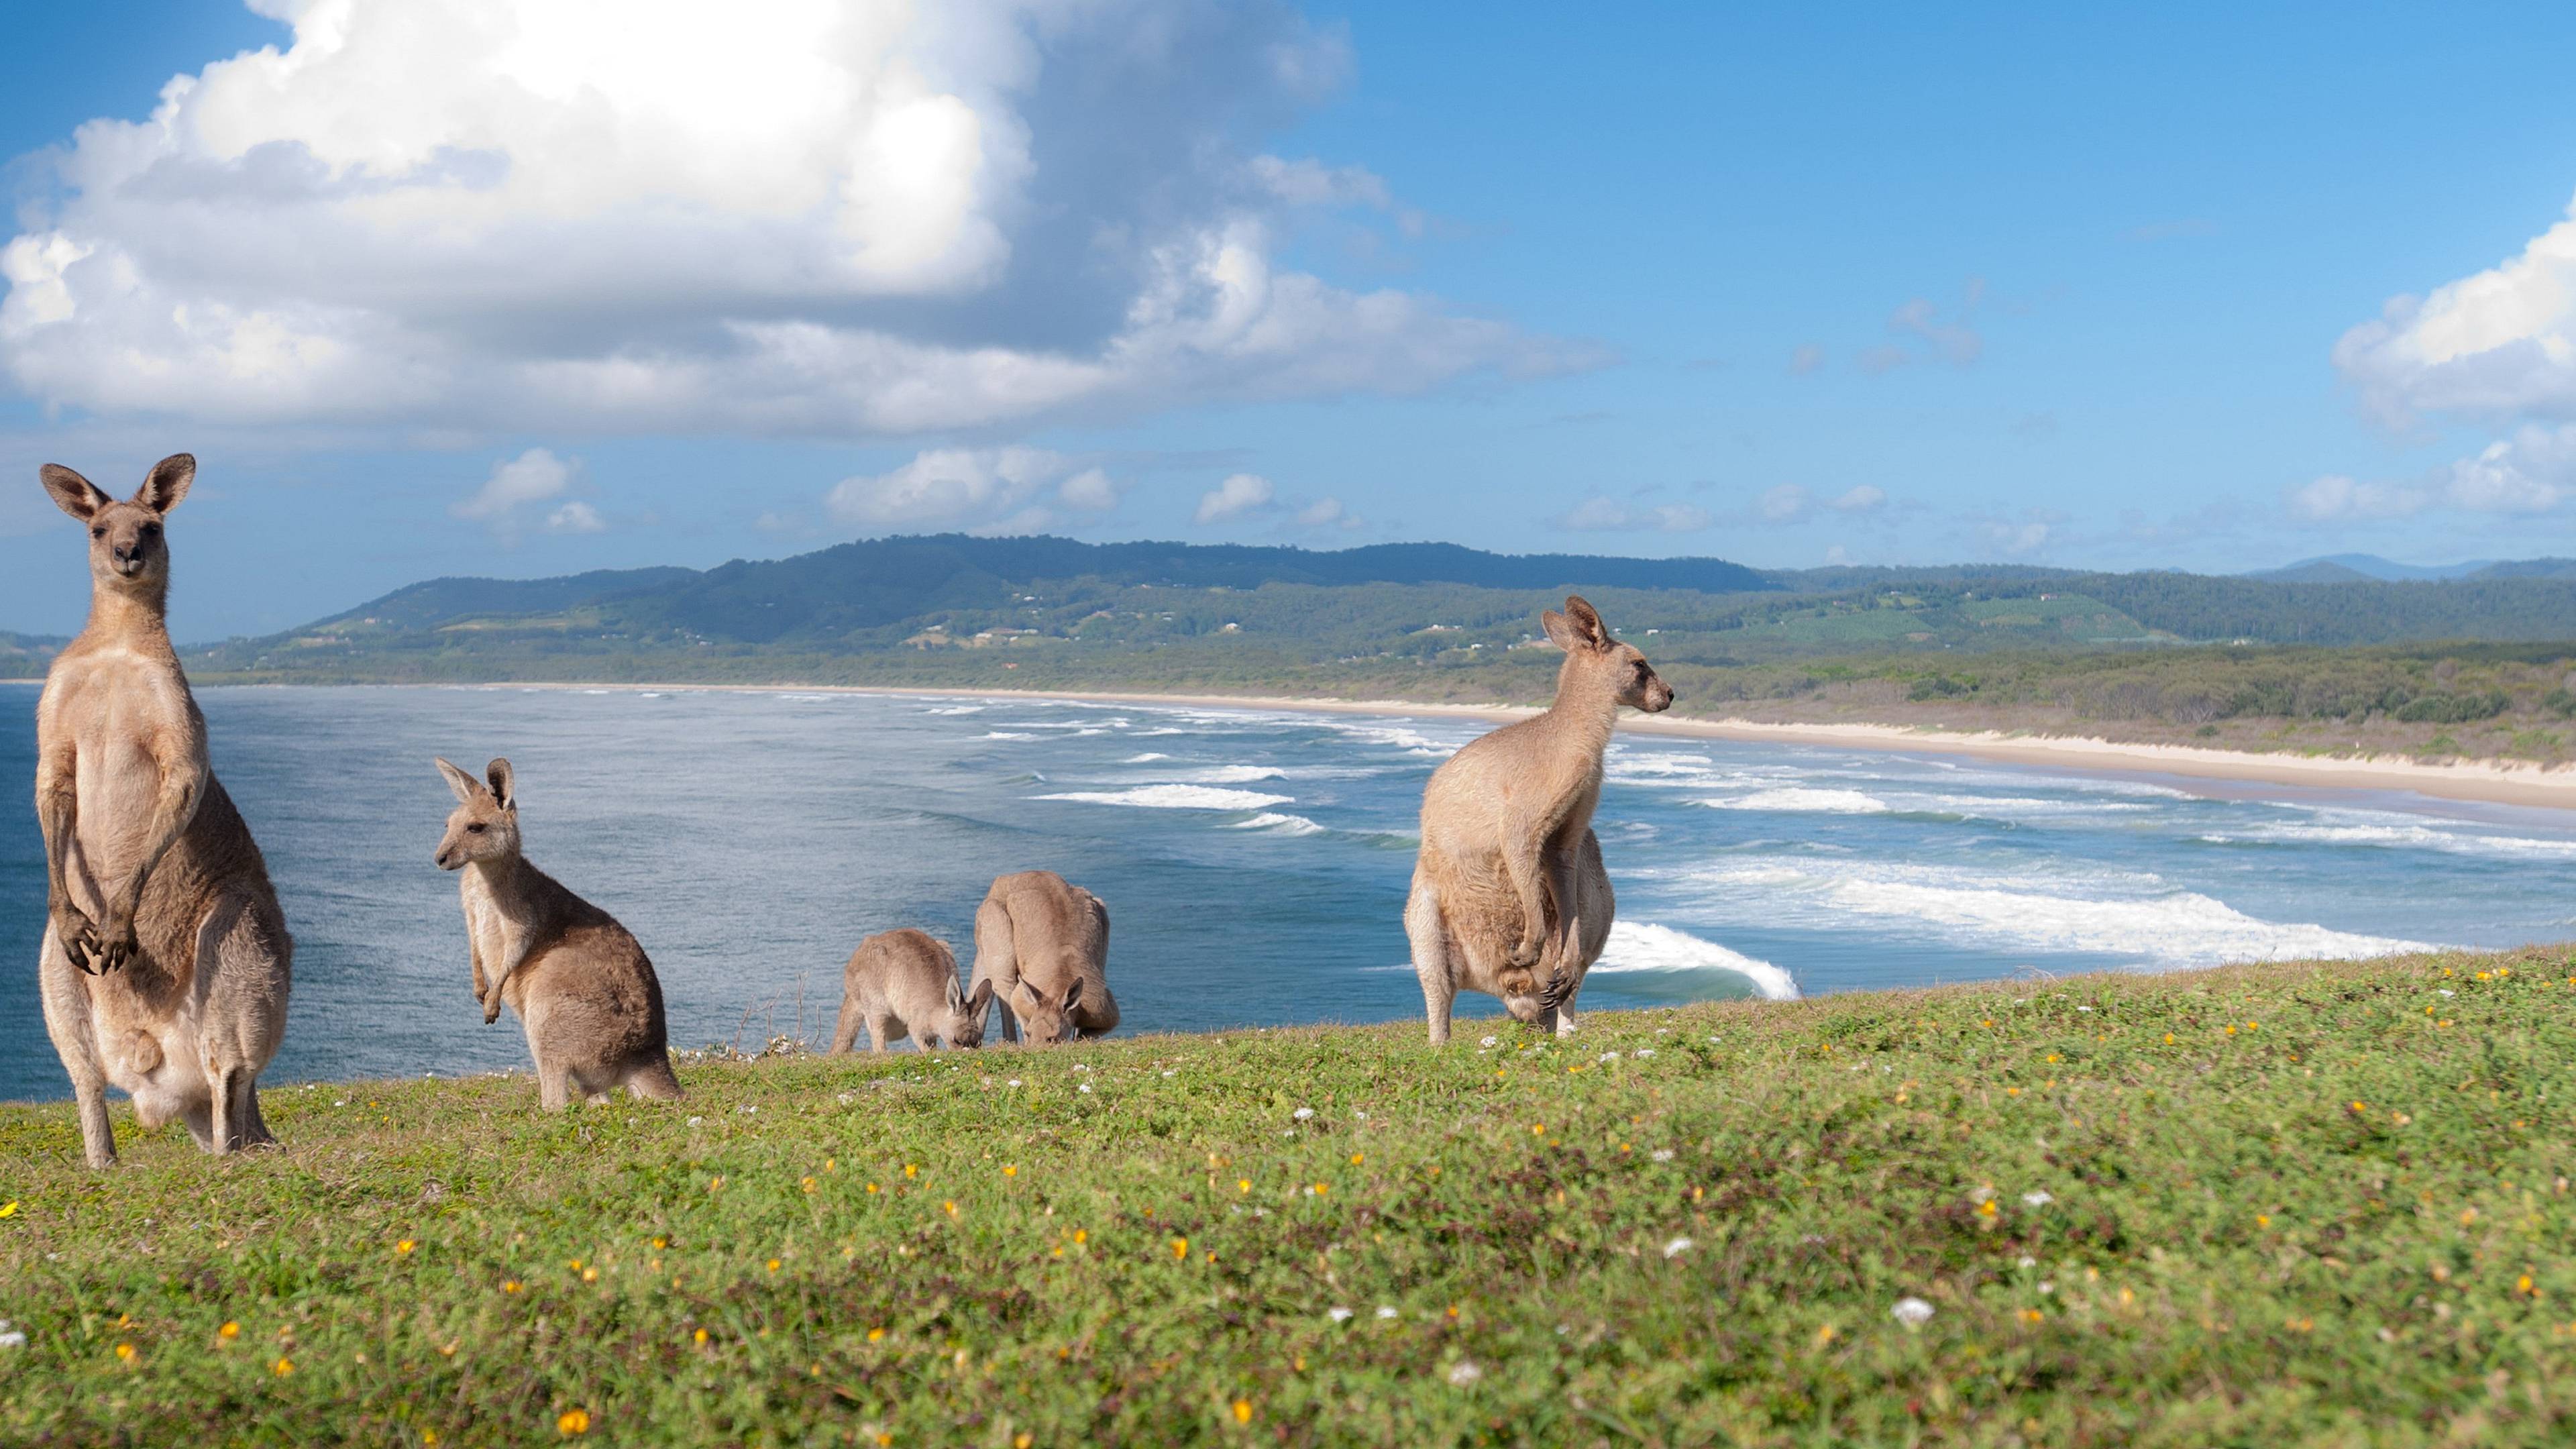 kangaroos on the beach in Emerald, Australia